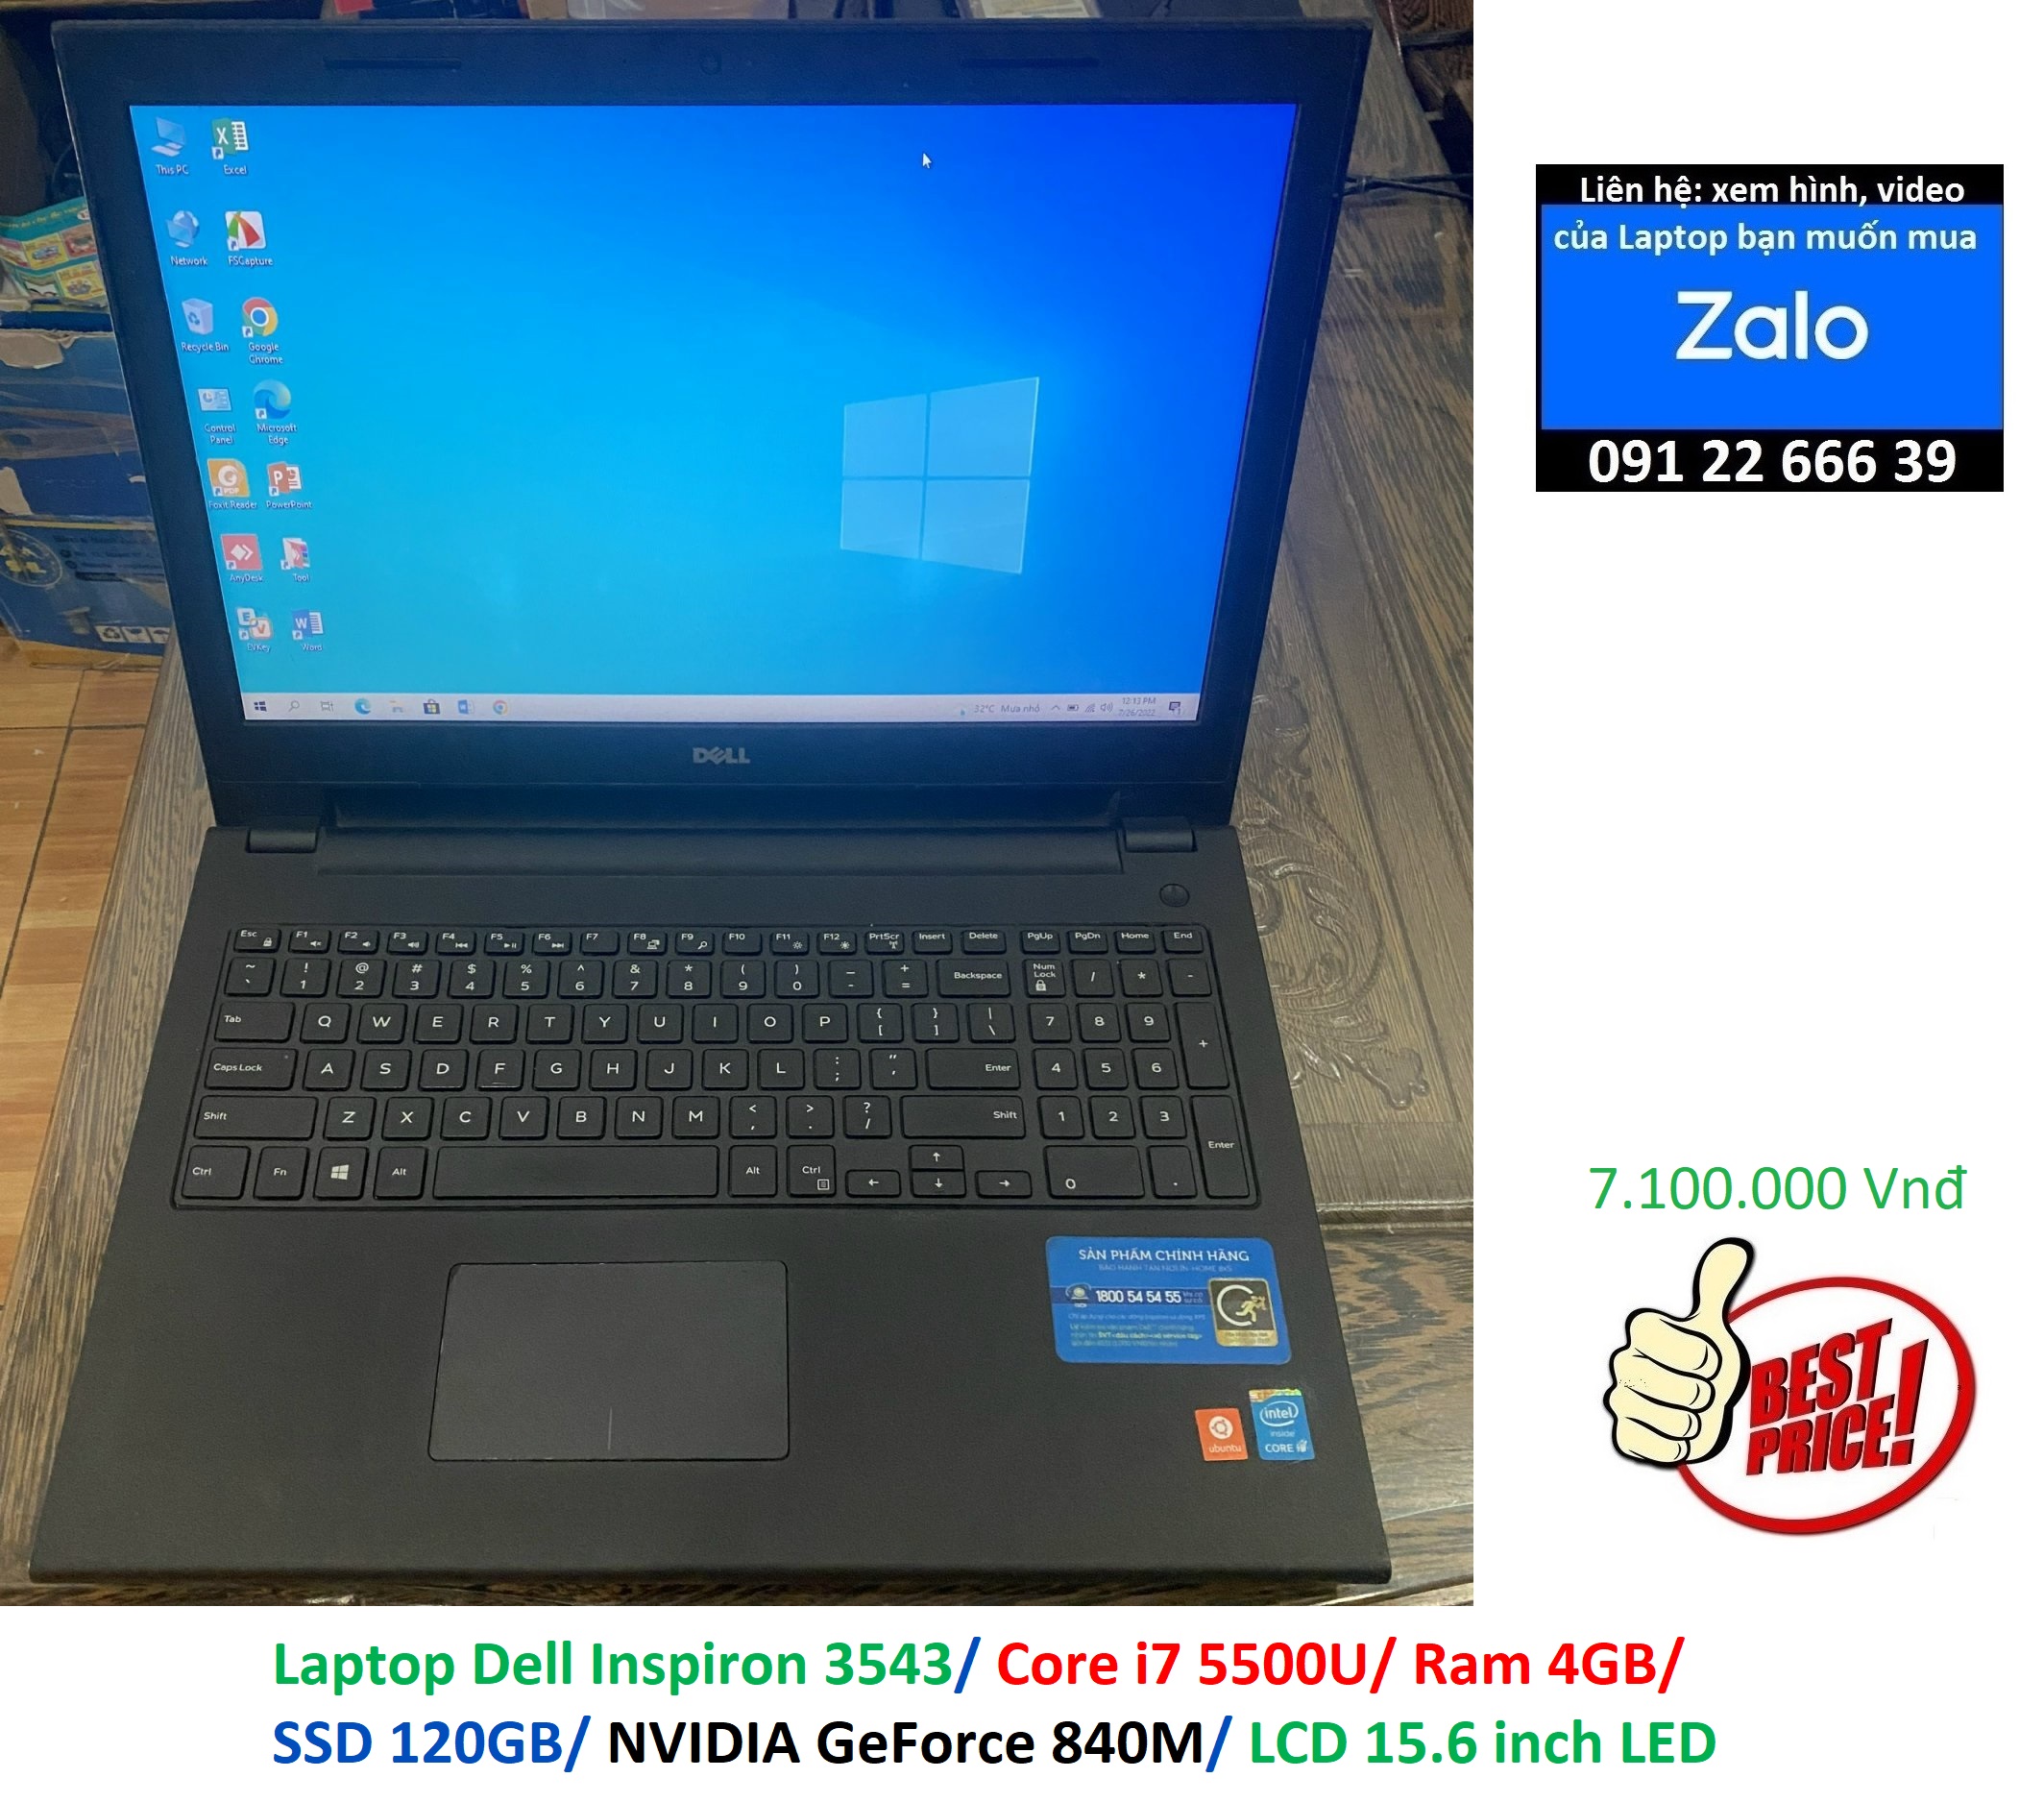 Laptop Dell Inspiron 3543/ Core i7 5500U/ Ram 4GB/ SSD 120GB/ NVIDIA GeForce 840M/ LCD 15.6 inch LED